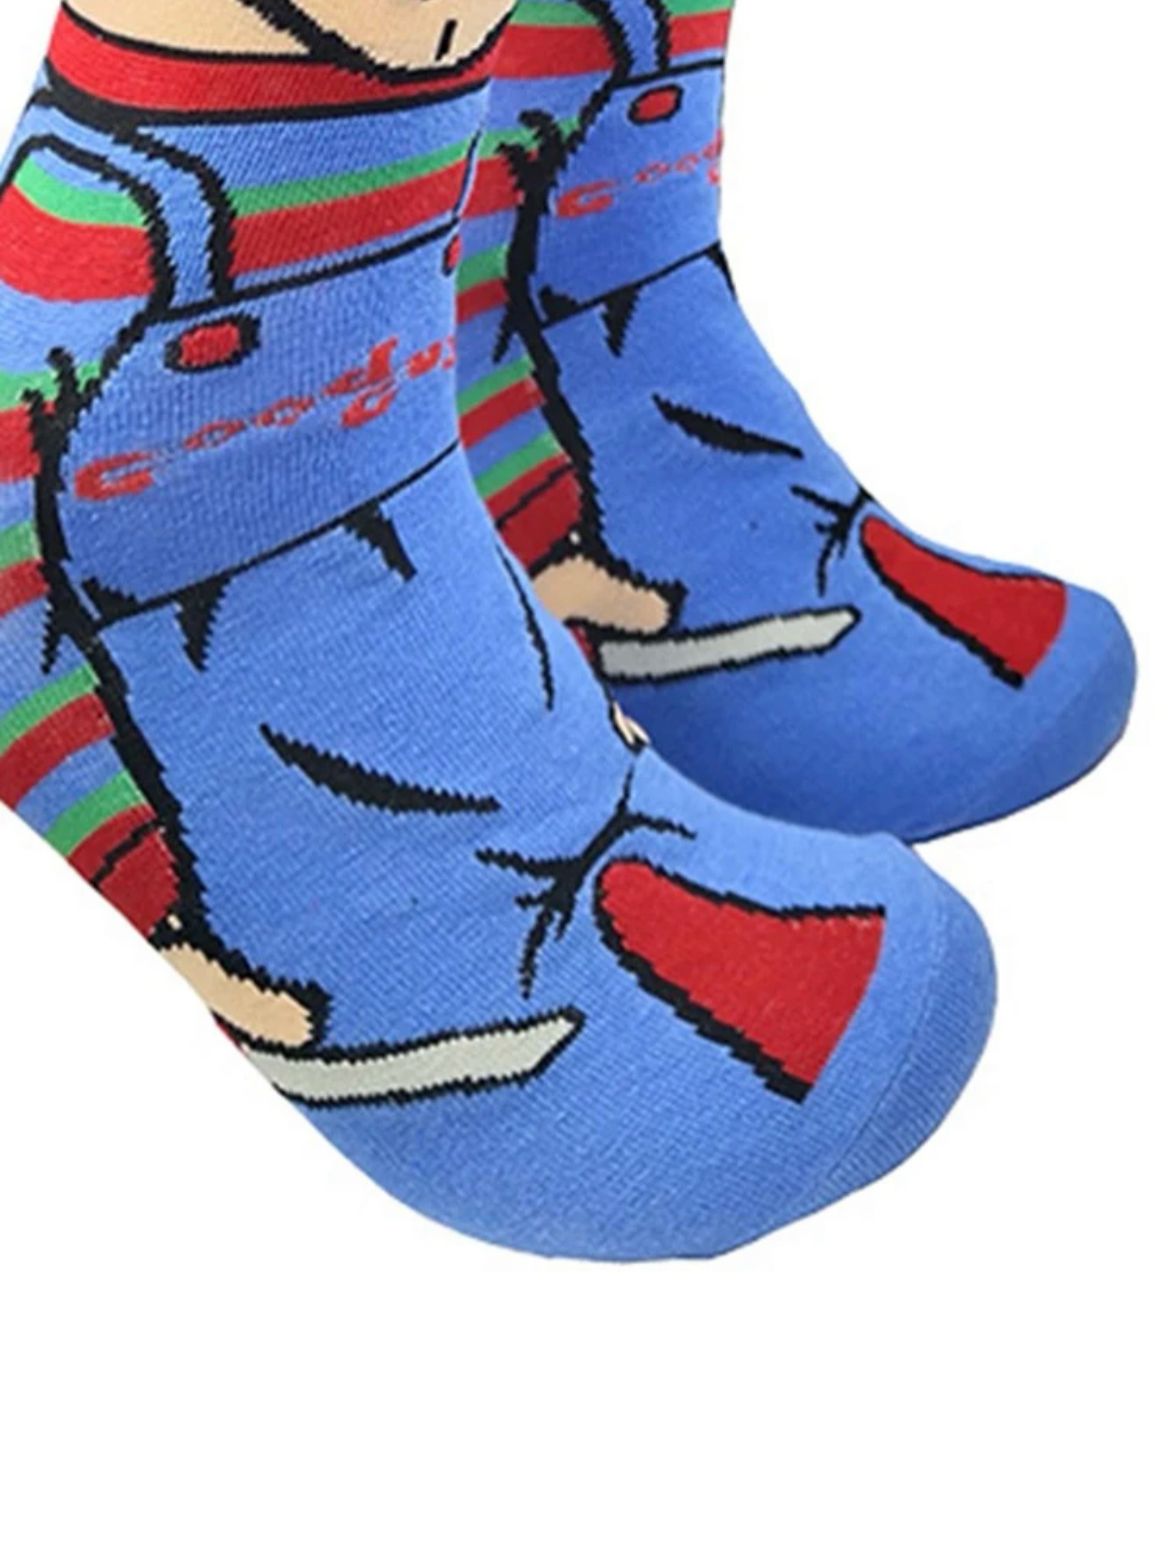 Chucky Child's Play Socks